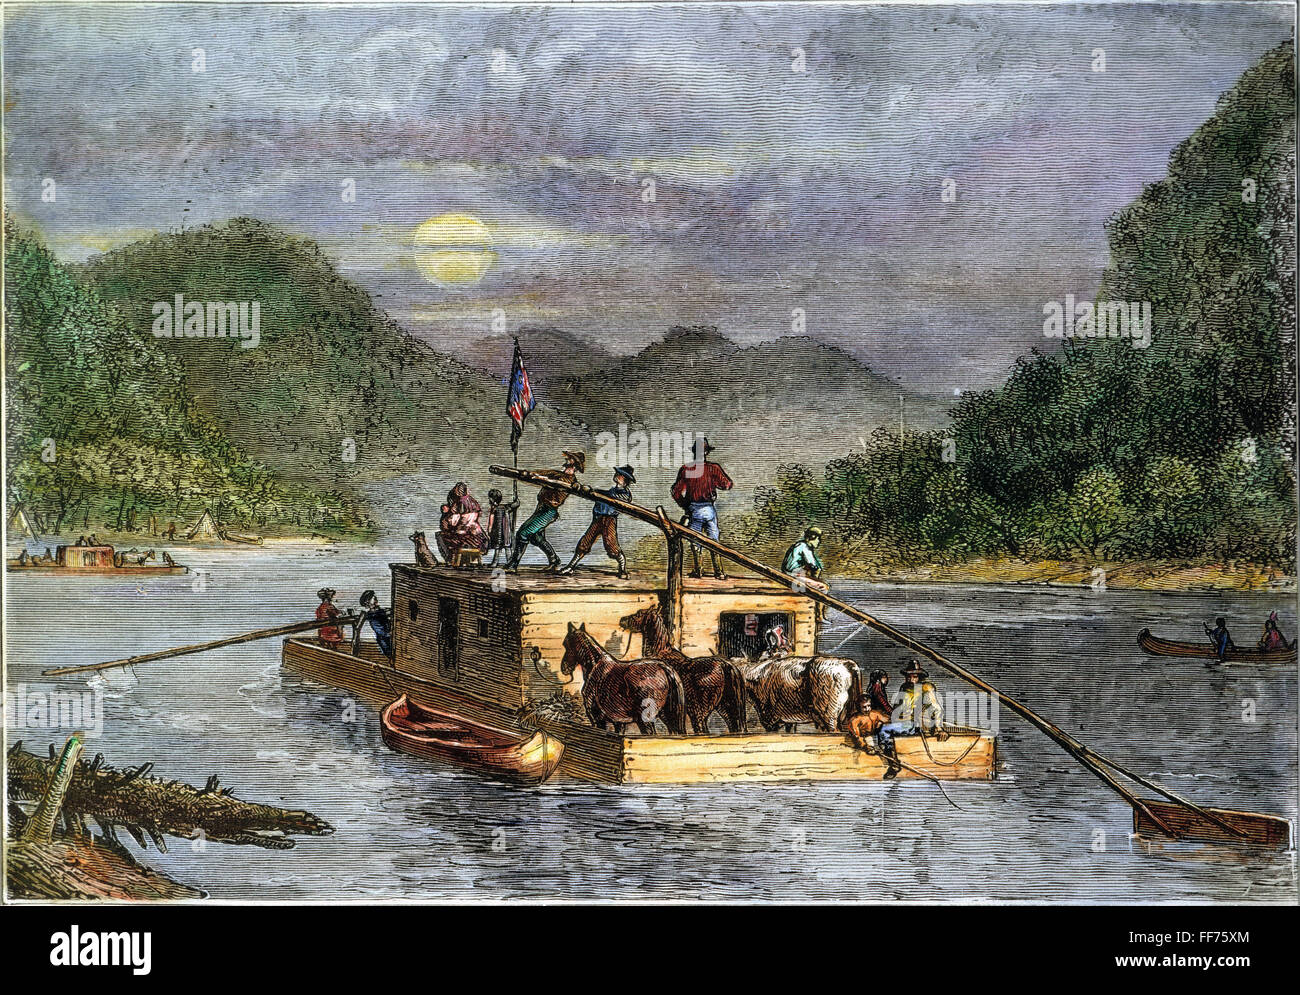 FLACHBOOT, 19. JAHRHUNDERT. /nEmigrants Reisen mit Flachboot auf dem Missouri River. Holz-Gravur, American, 19. Jahrhundert. Stockfoto